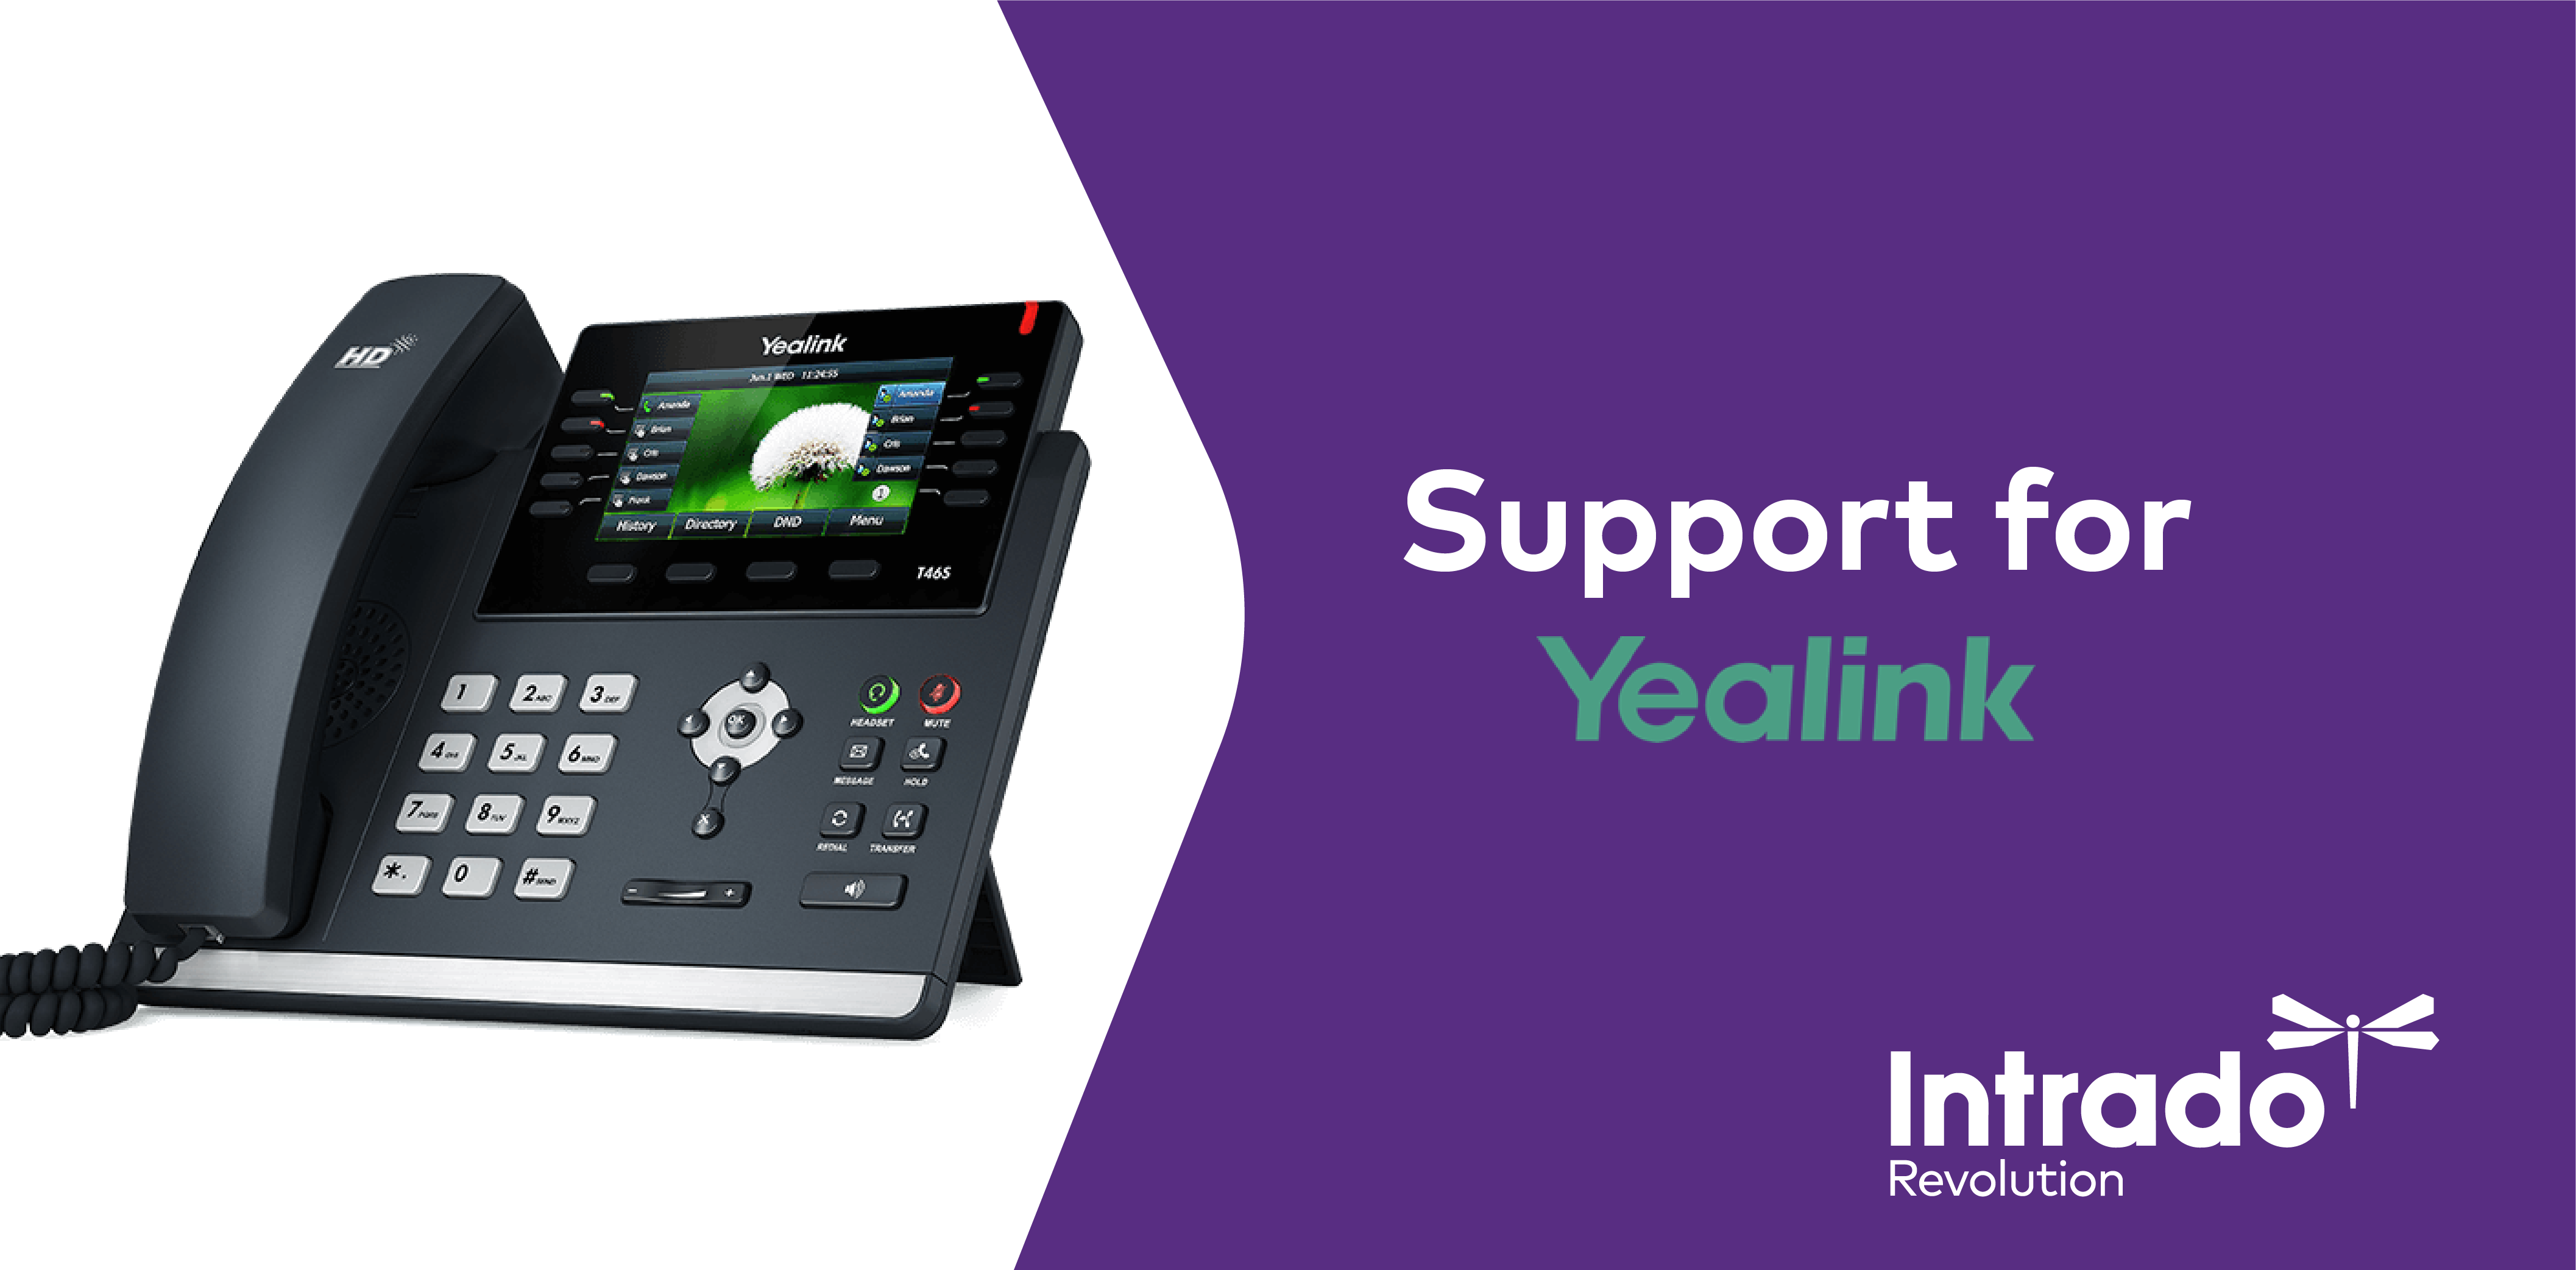 Support for yealink phones